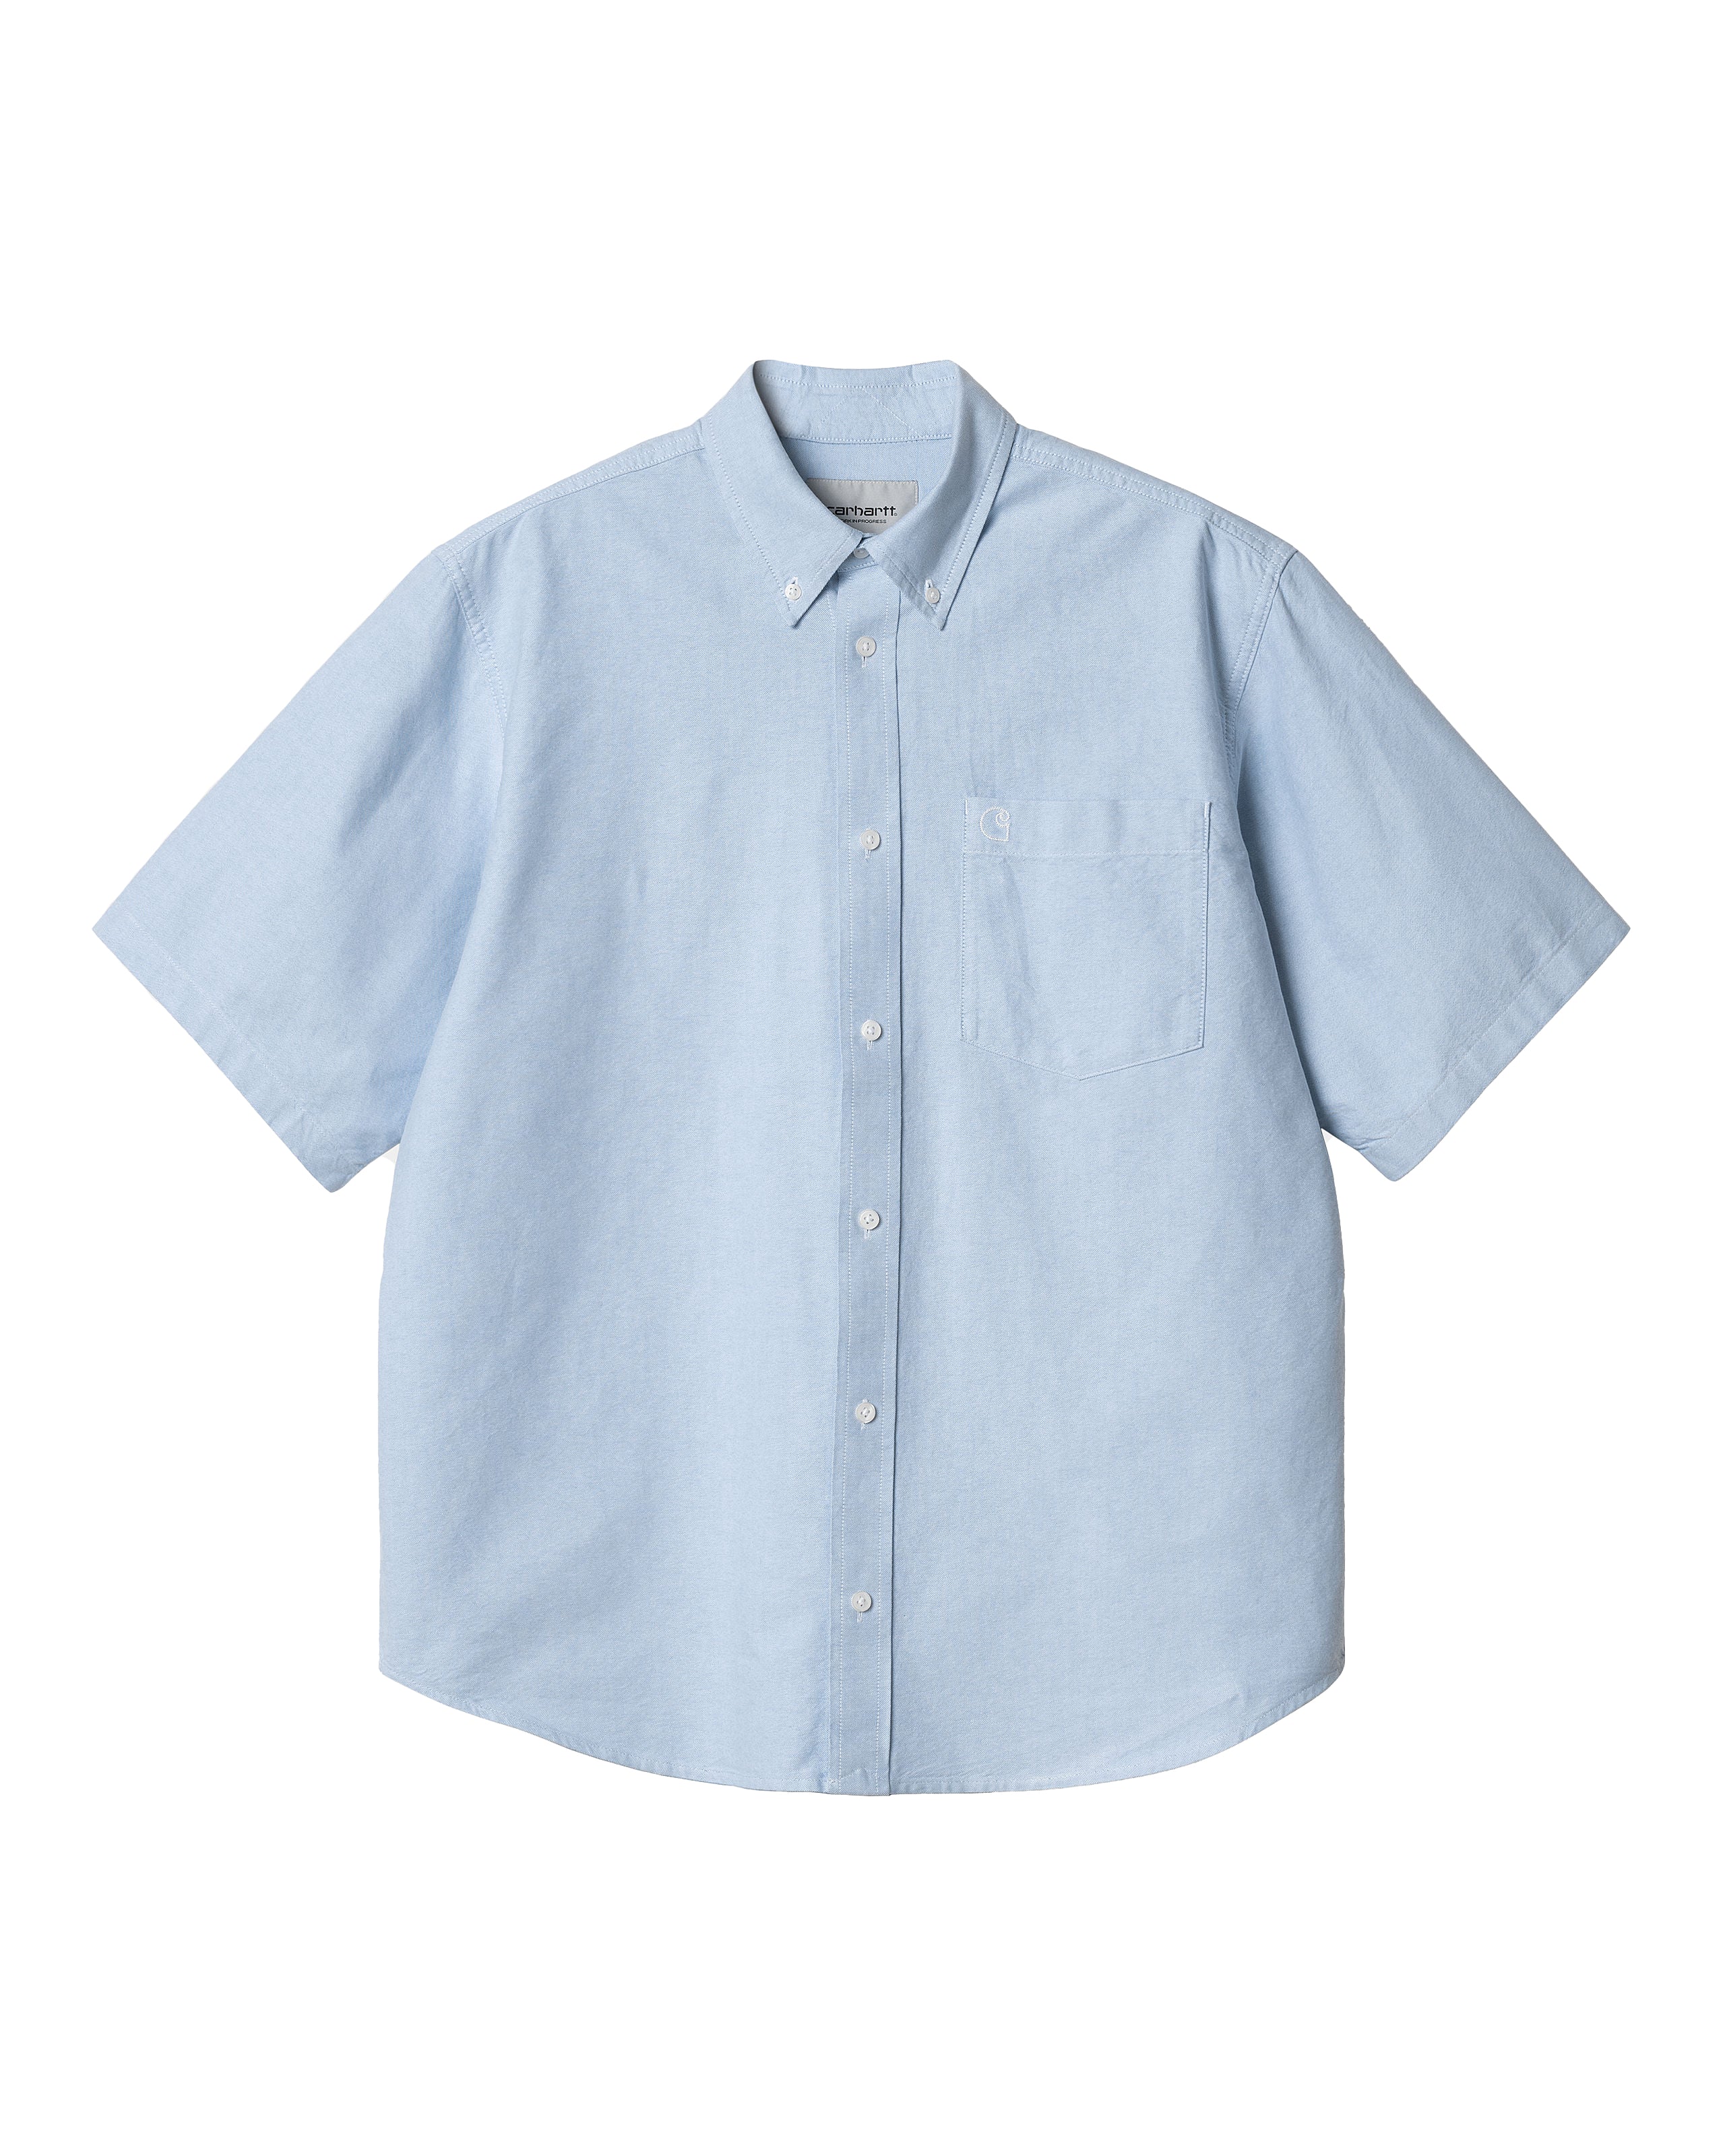 SS Braxton Shirt - Bleach/Wax